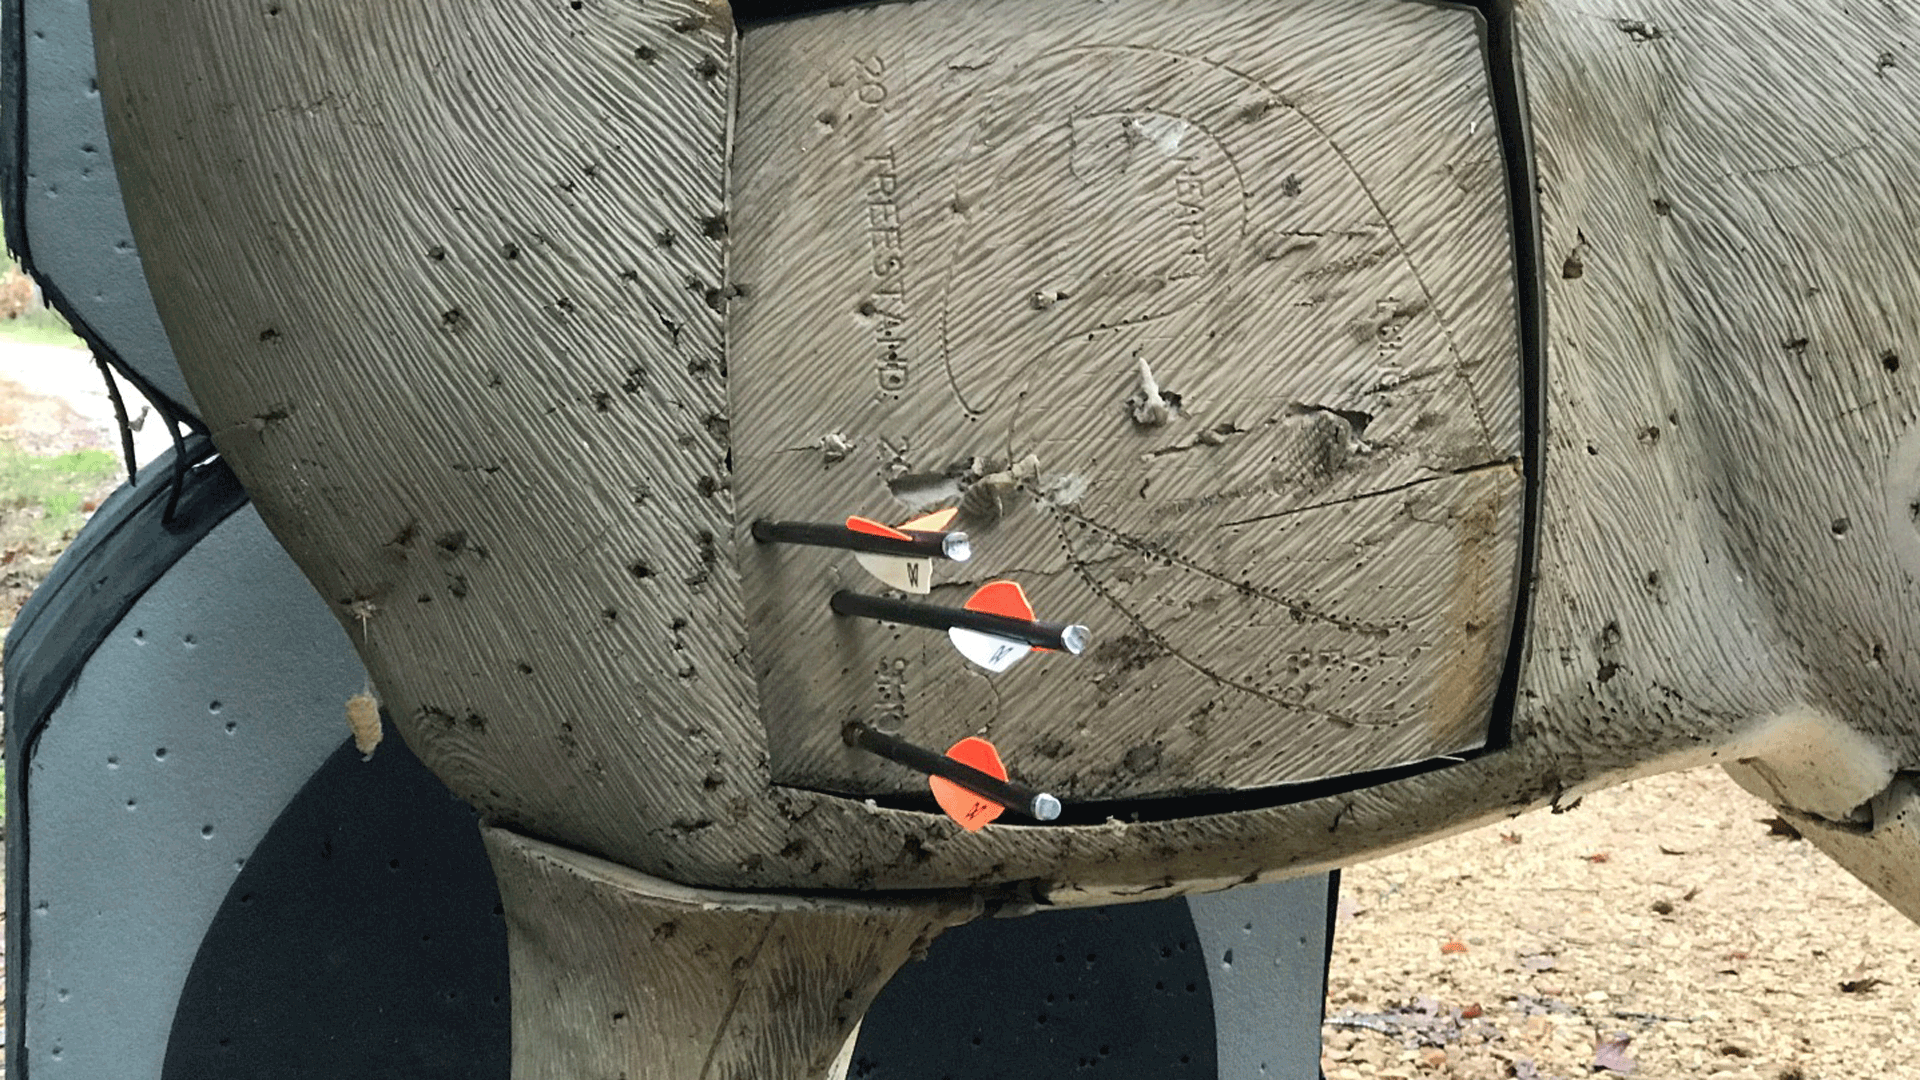 Arrows-in-target